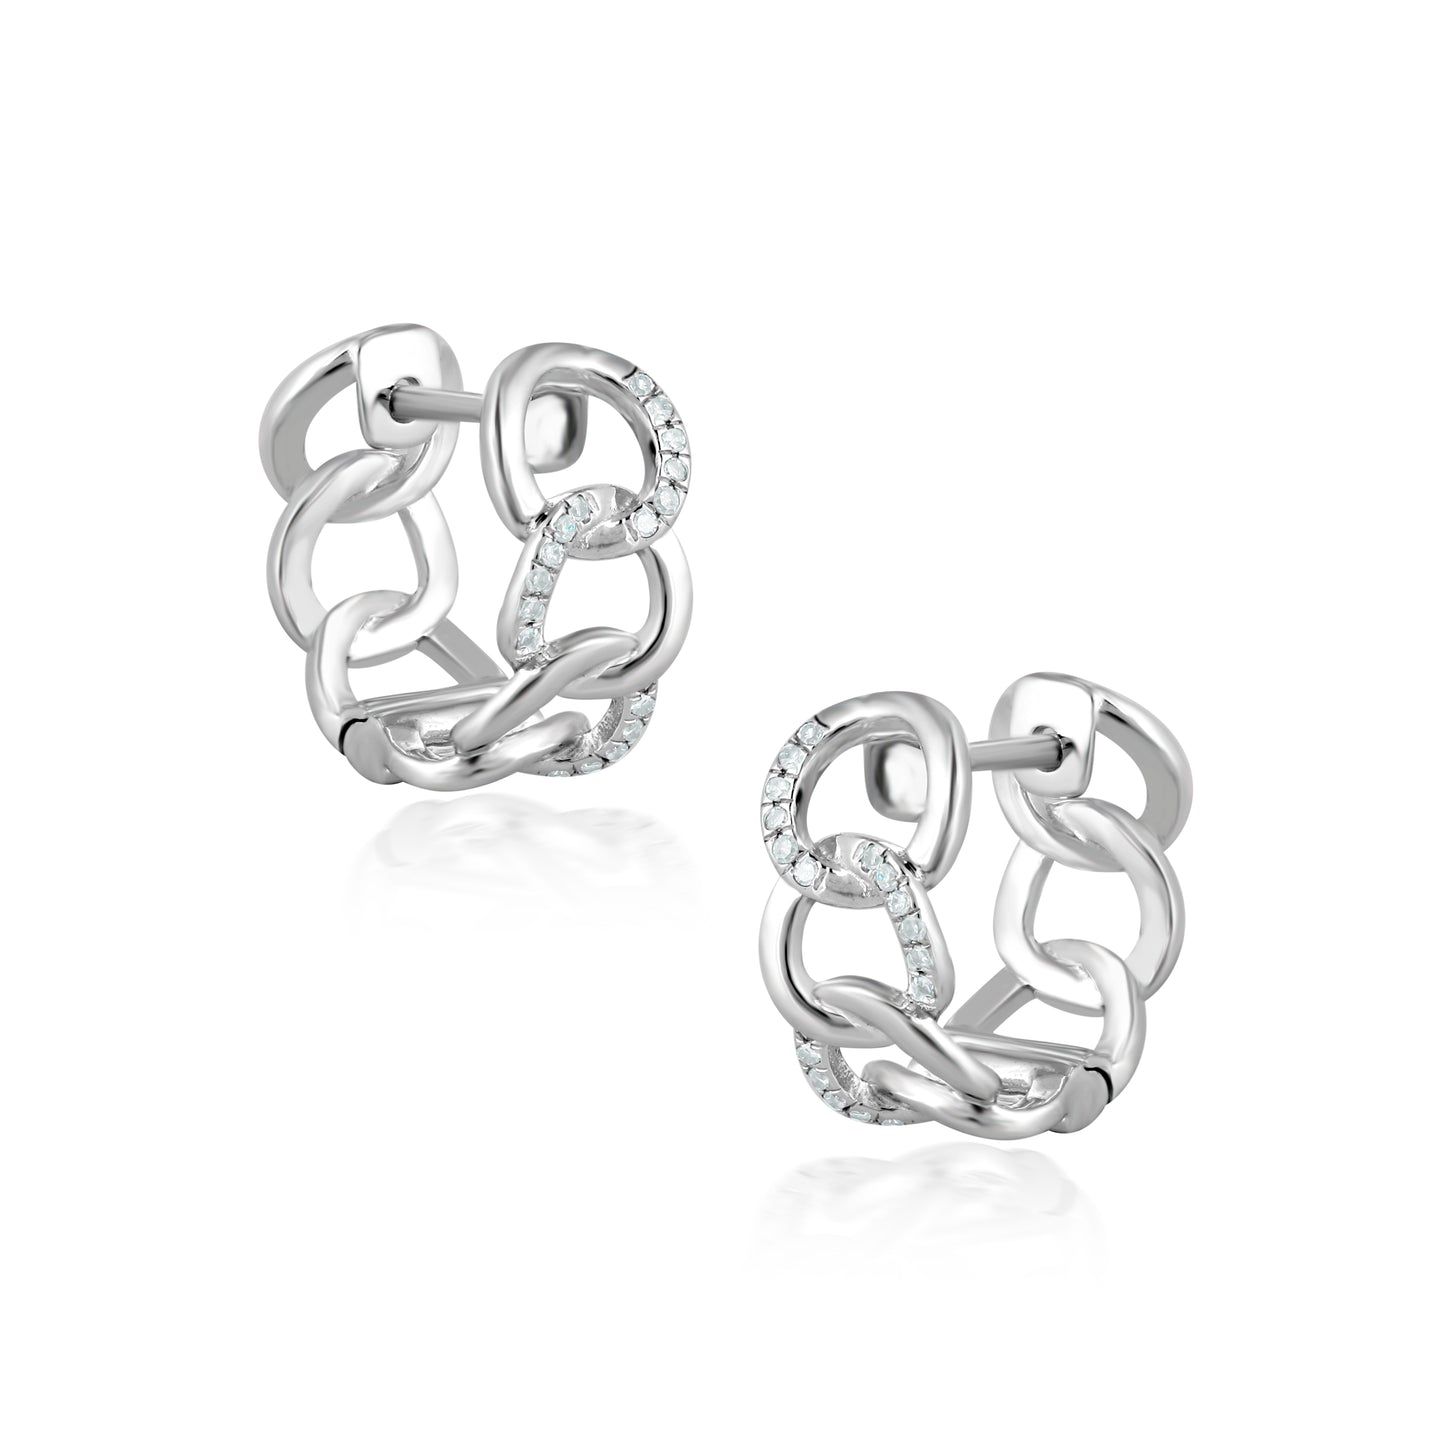 14K White Gold Chain Link Hoop Earrings with Pavé Diamonds